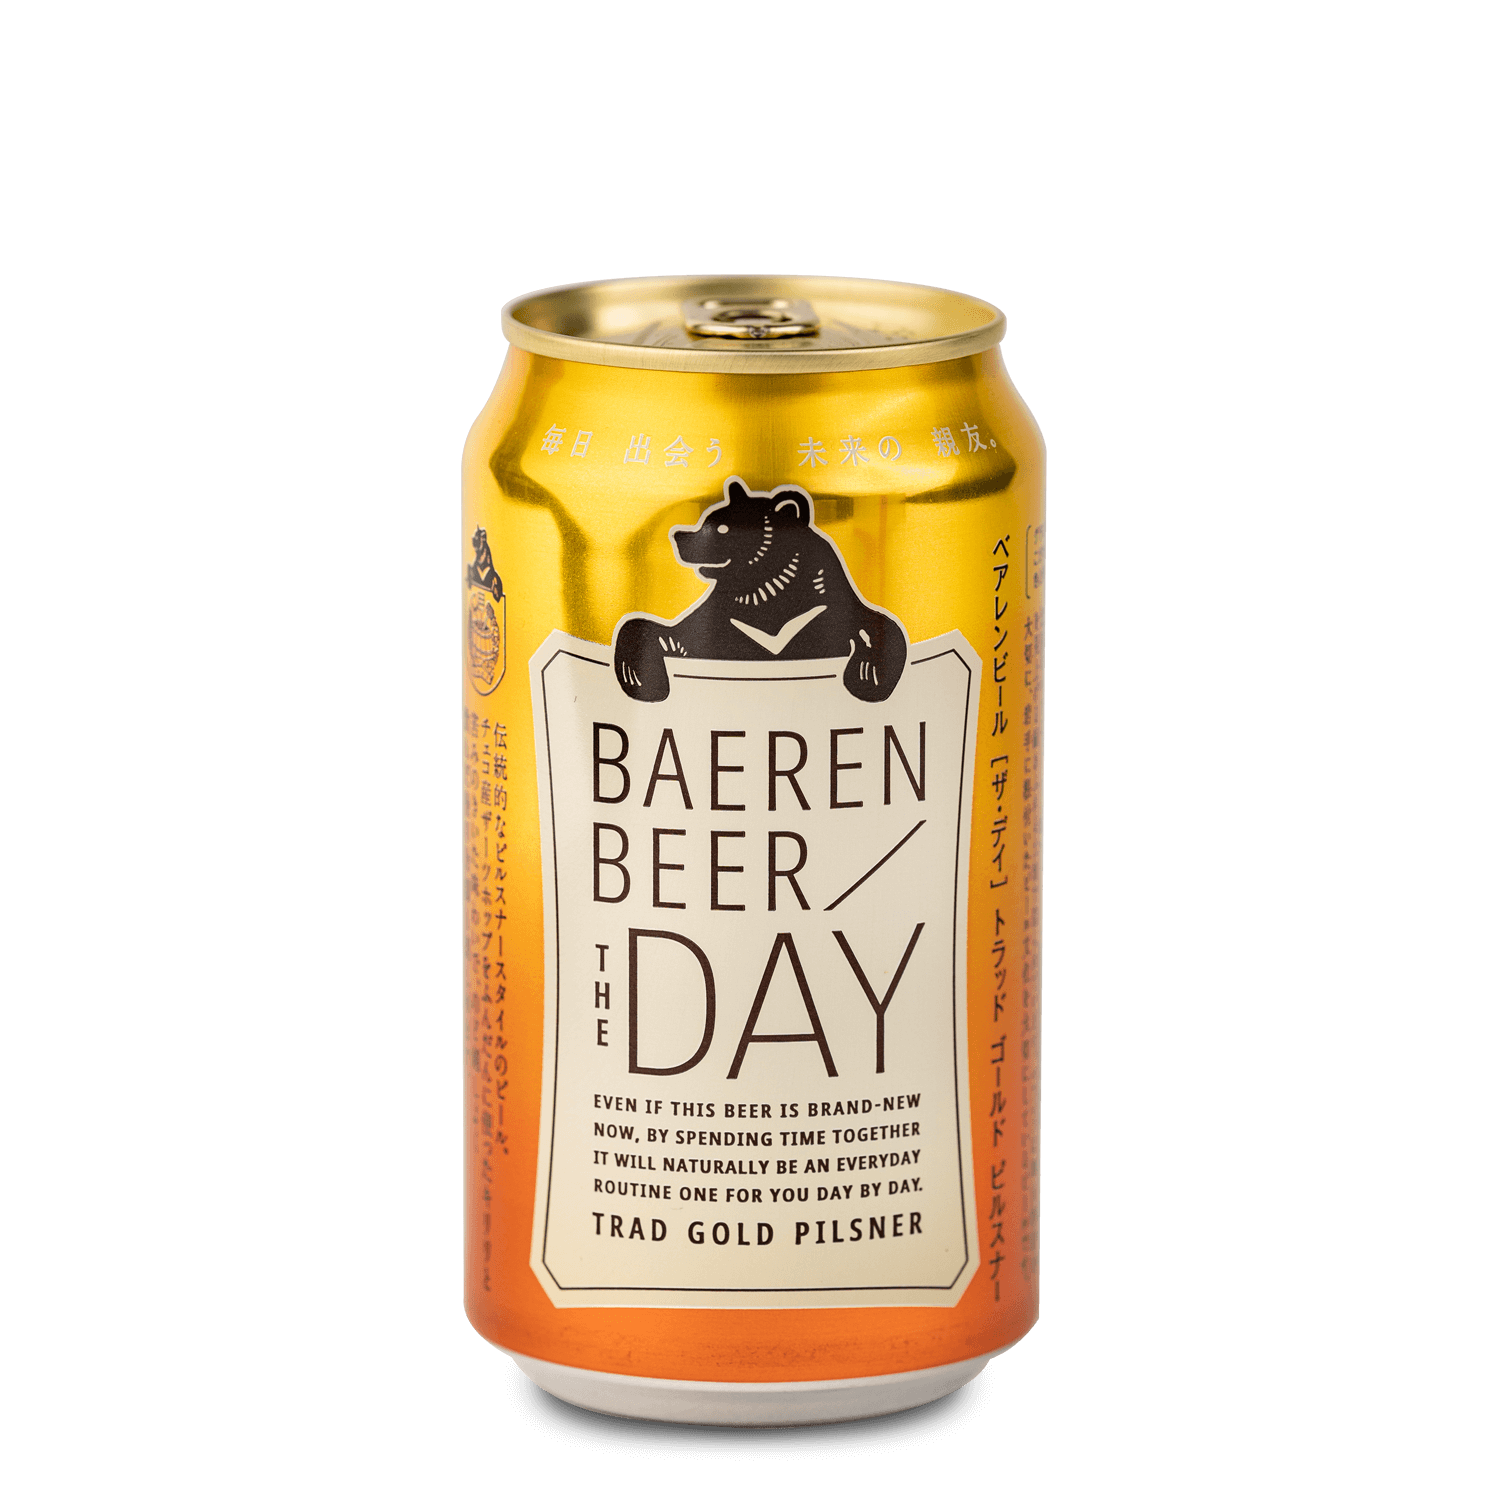 *BAEREN 'THE DAY' TRADITIONAL GOLD PILSNER BEER 12 x 350ml